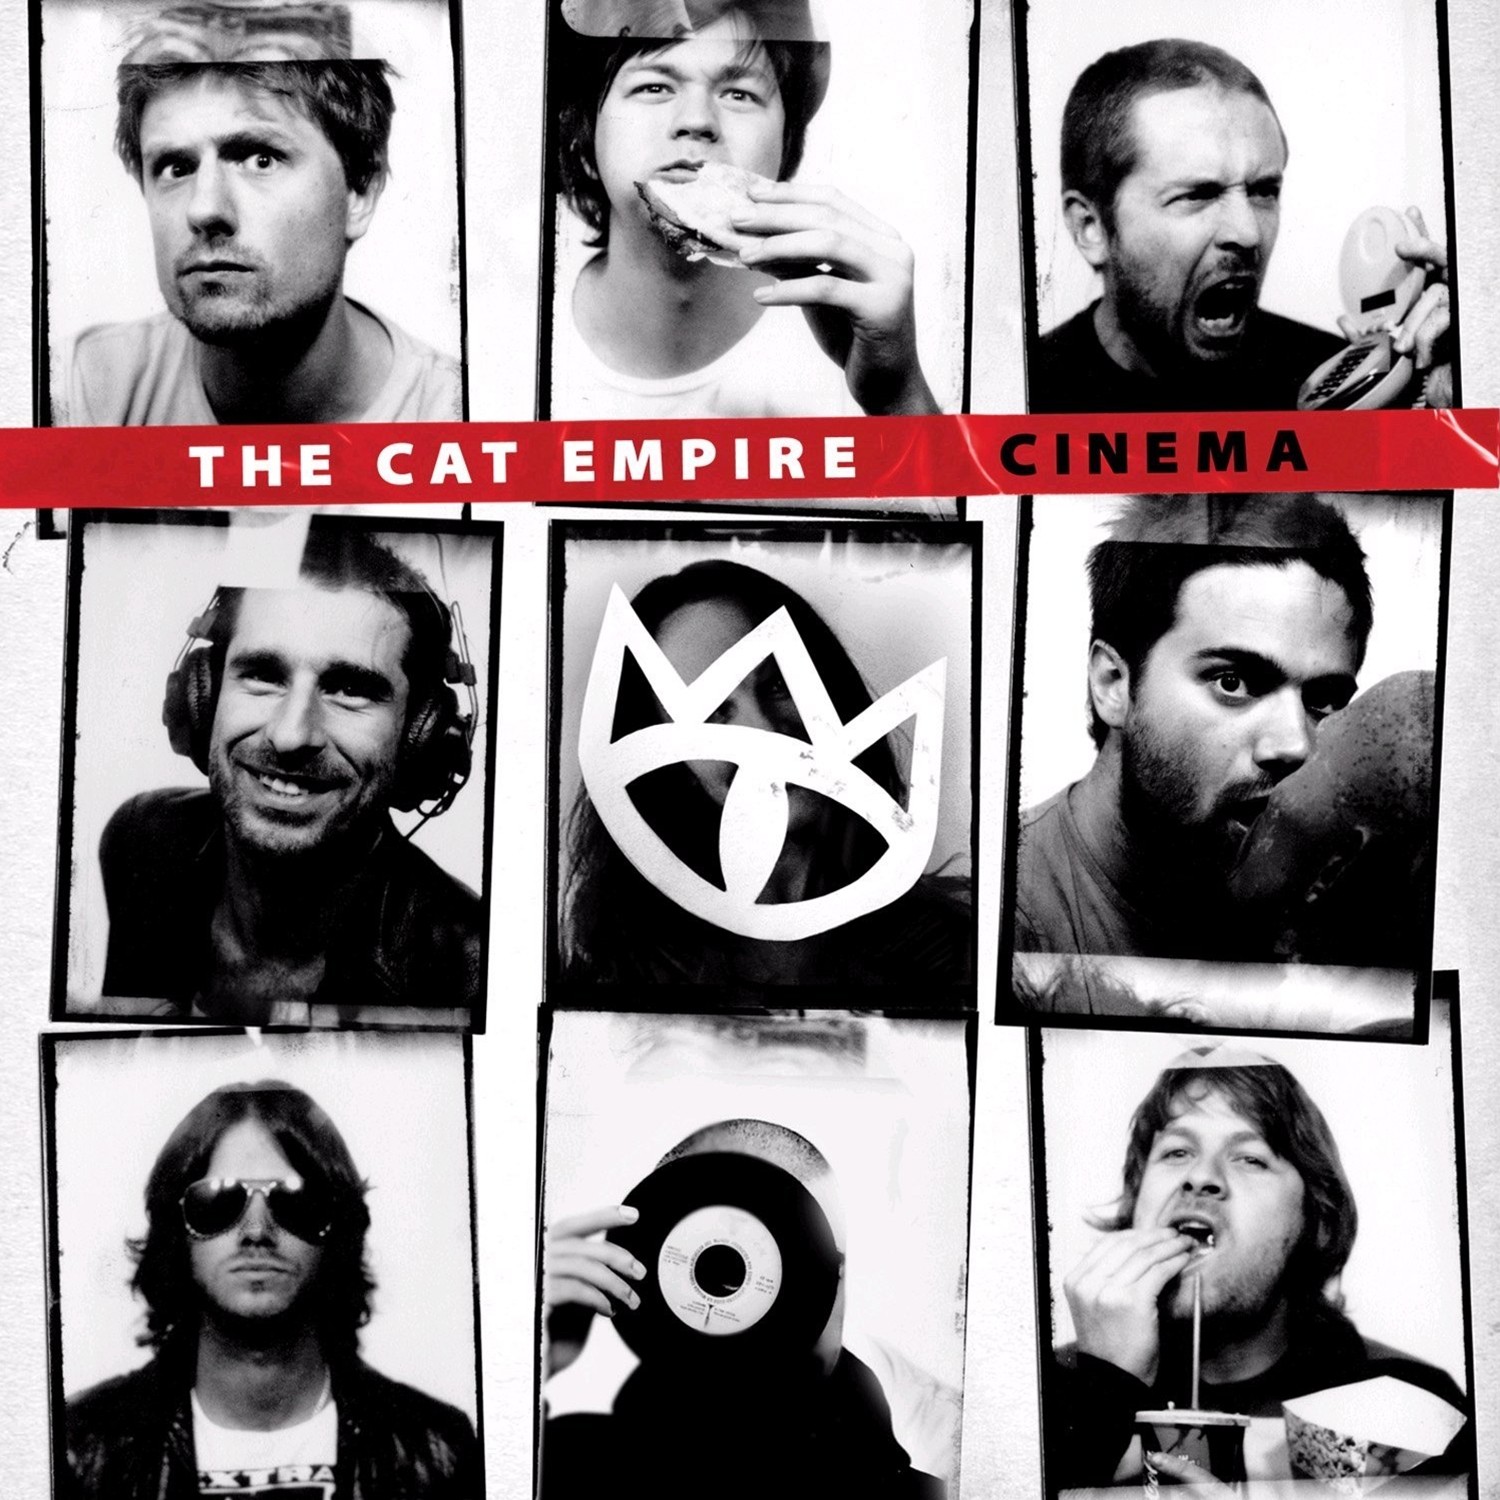 [Image: 00-the_cat_empire-cinema-2010-front.jpg]